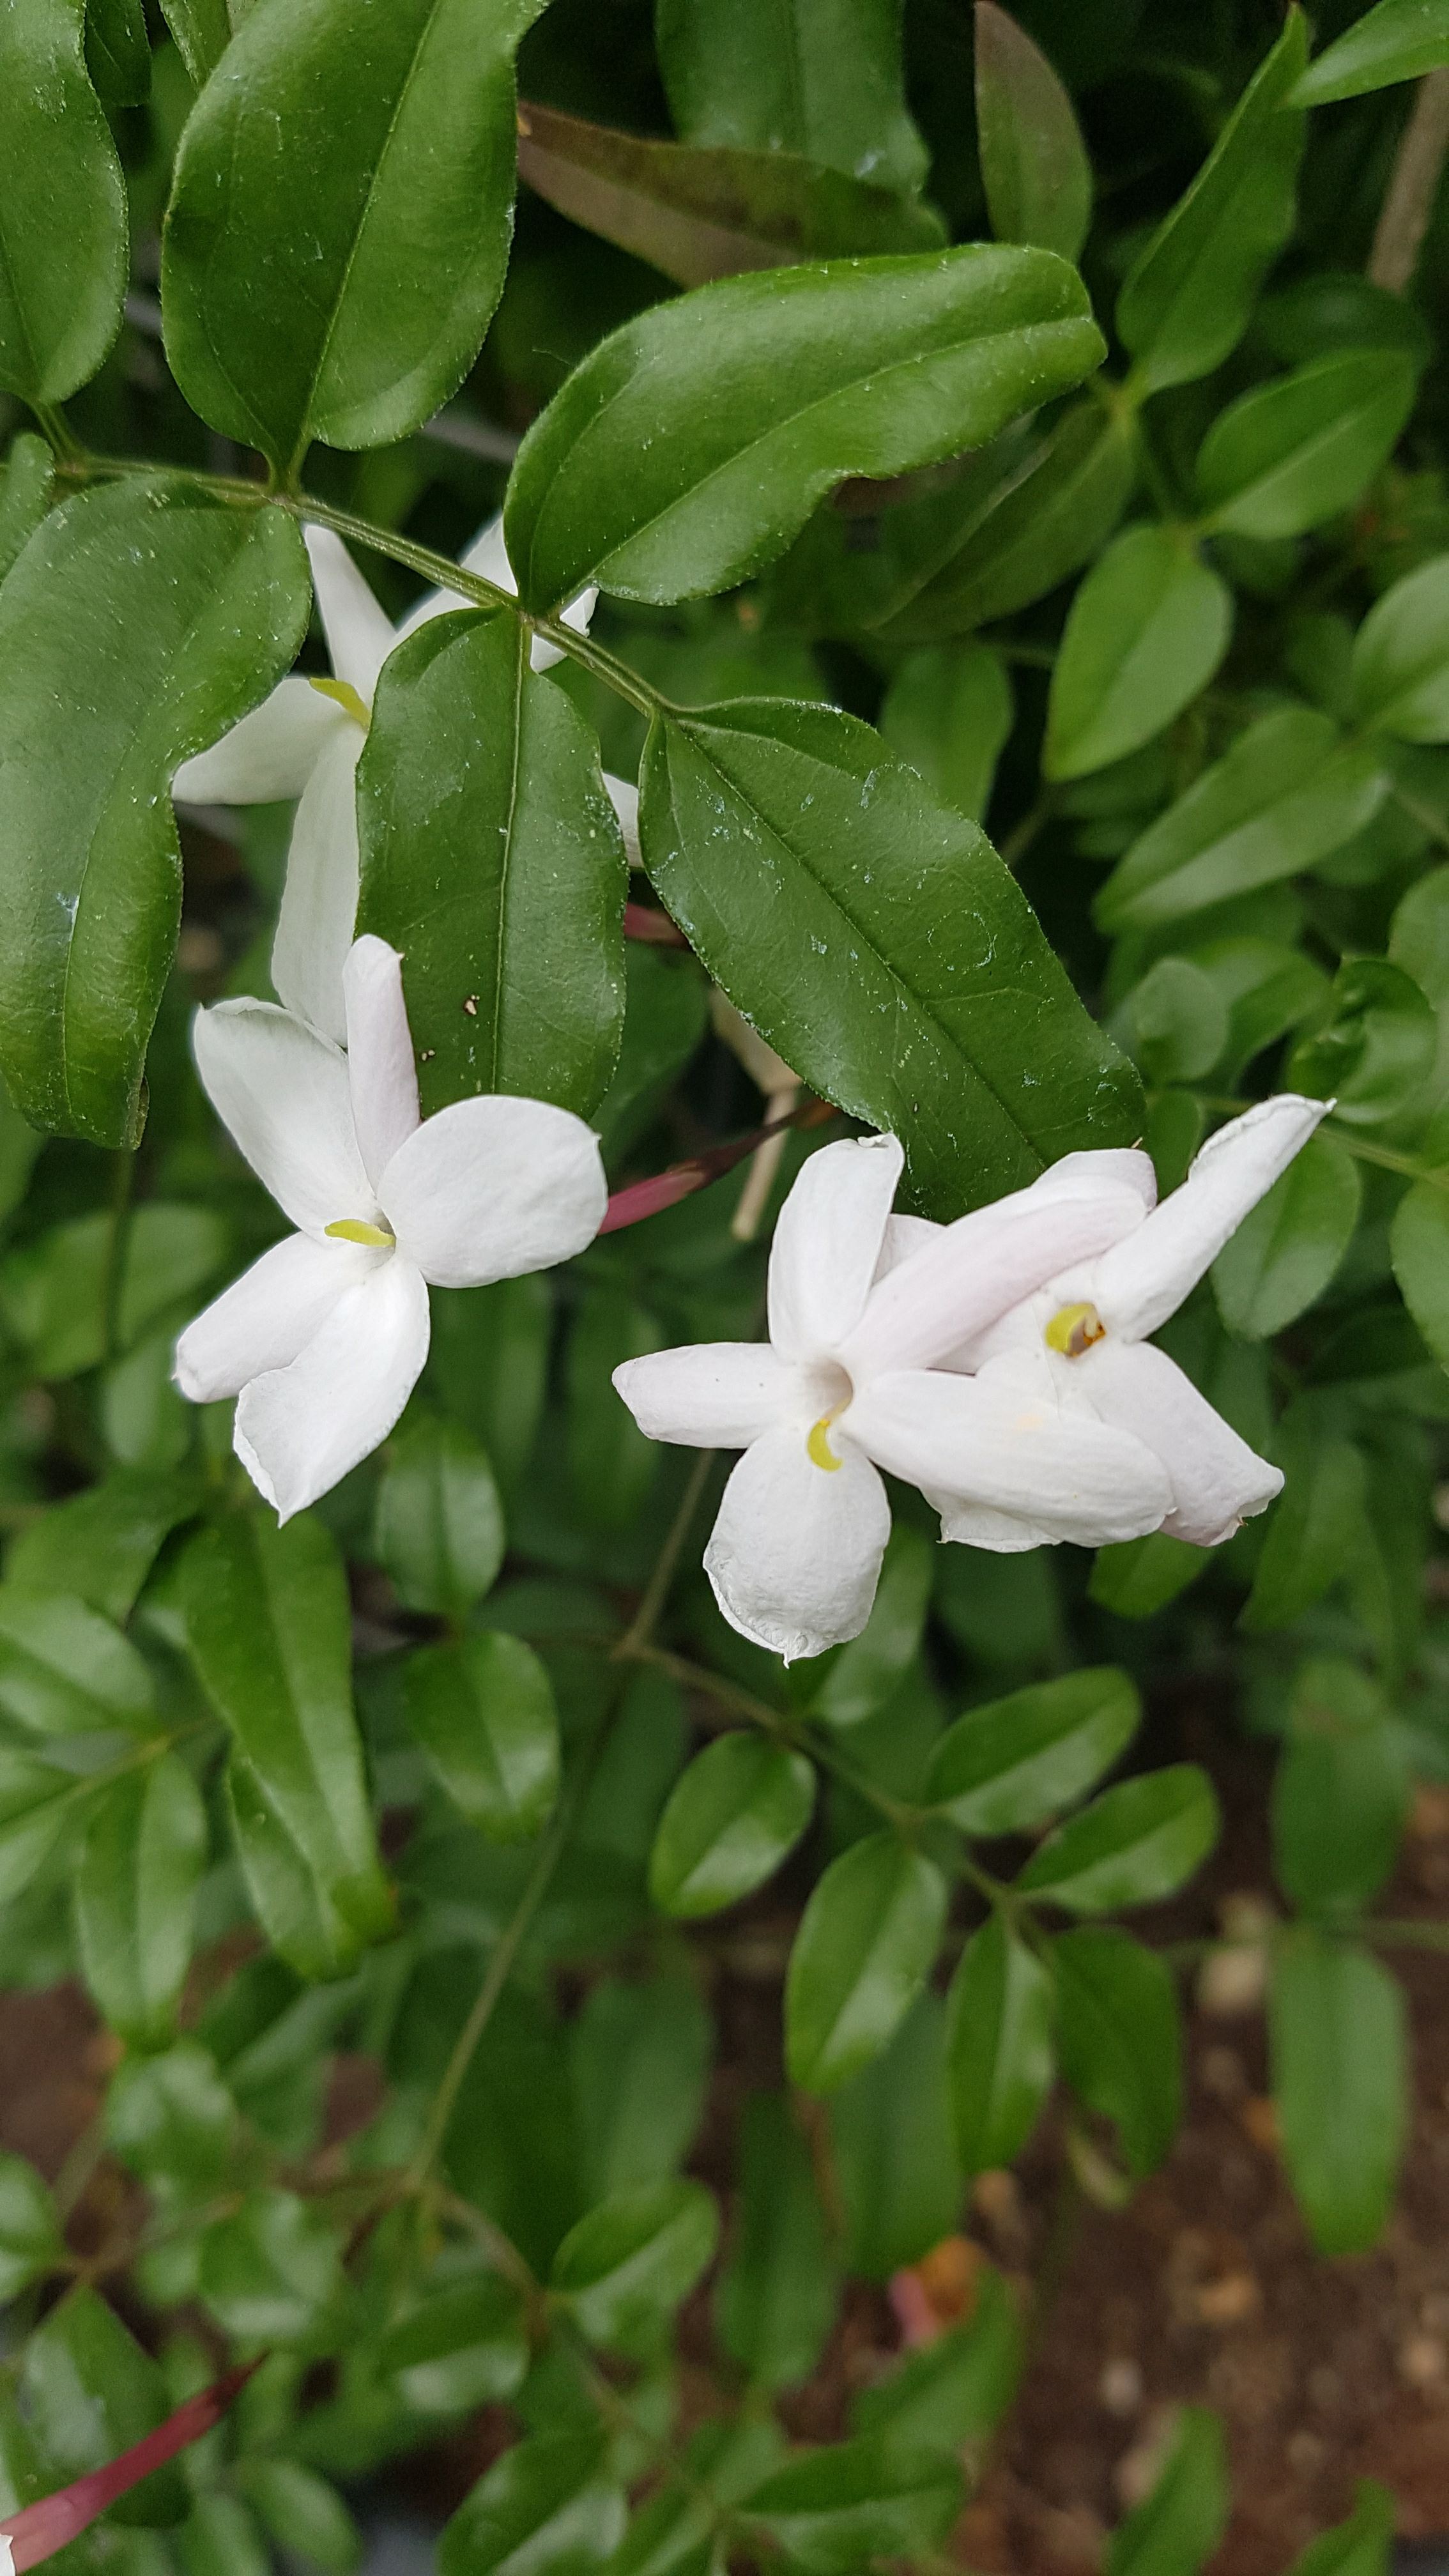 Jasminum polyanthum - Vielblütiger Jasmin, many-flowered jasmin